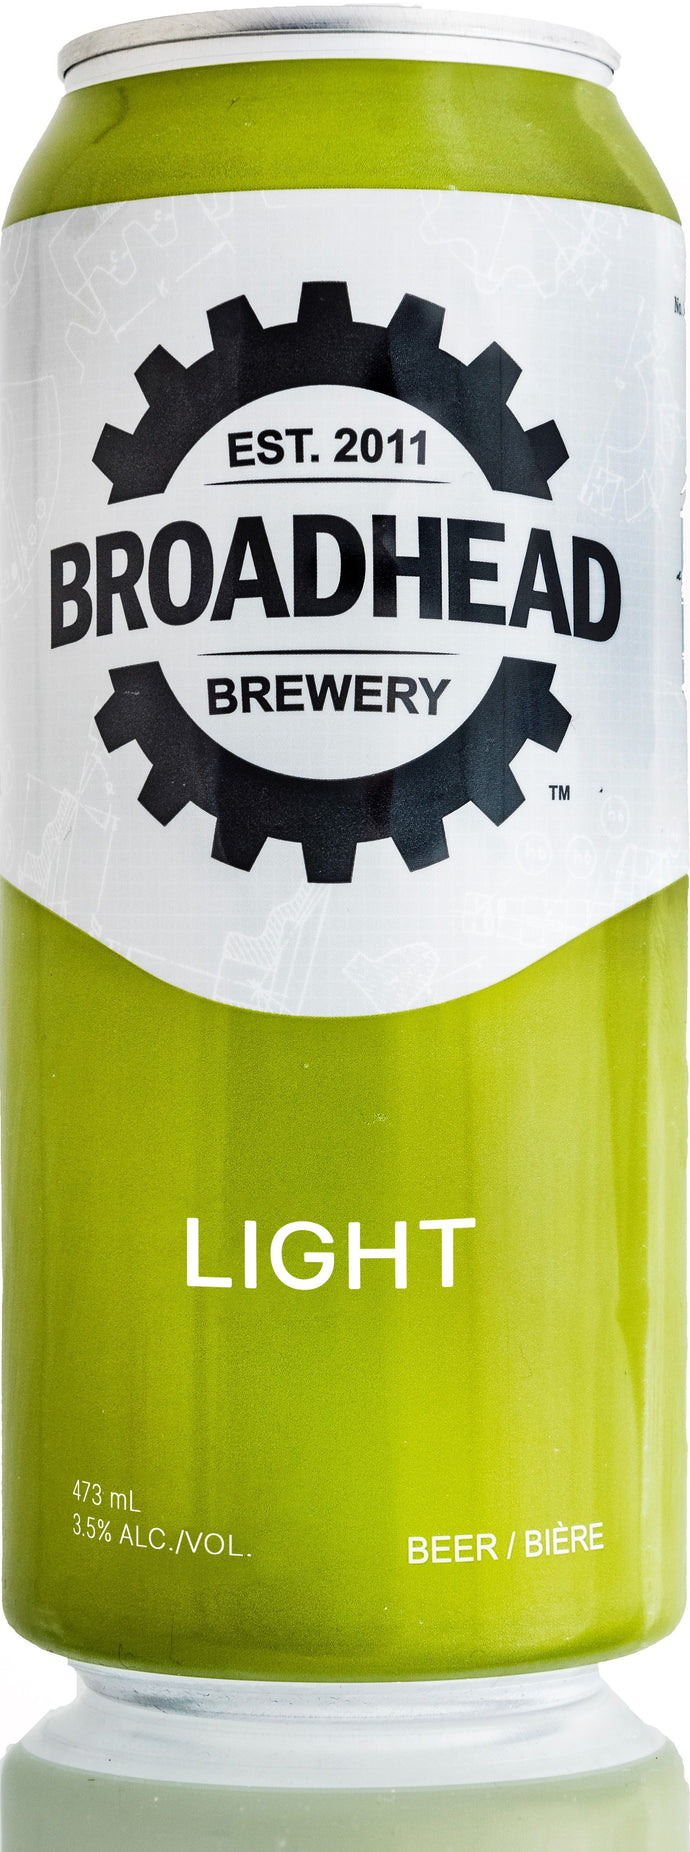 BROADHEAD LIGHT - 473mL